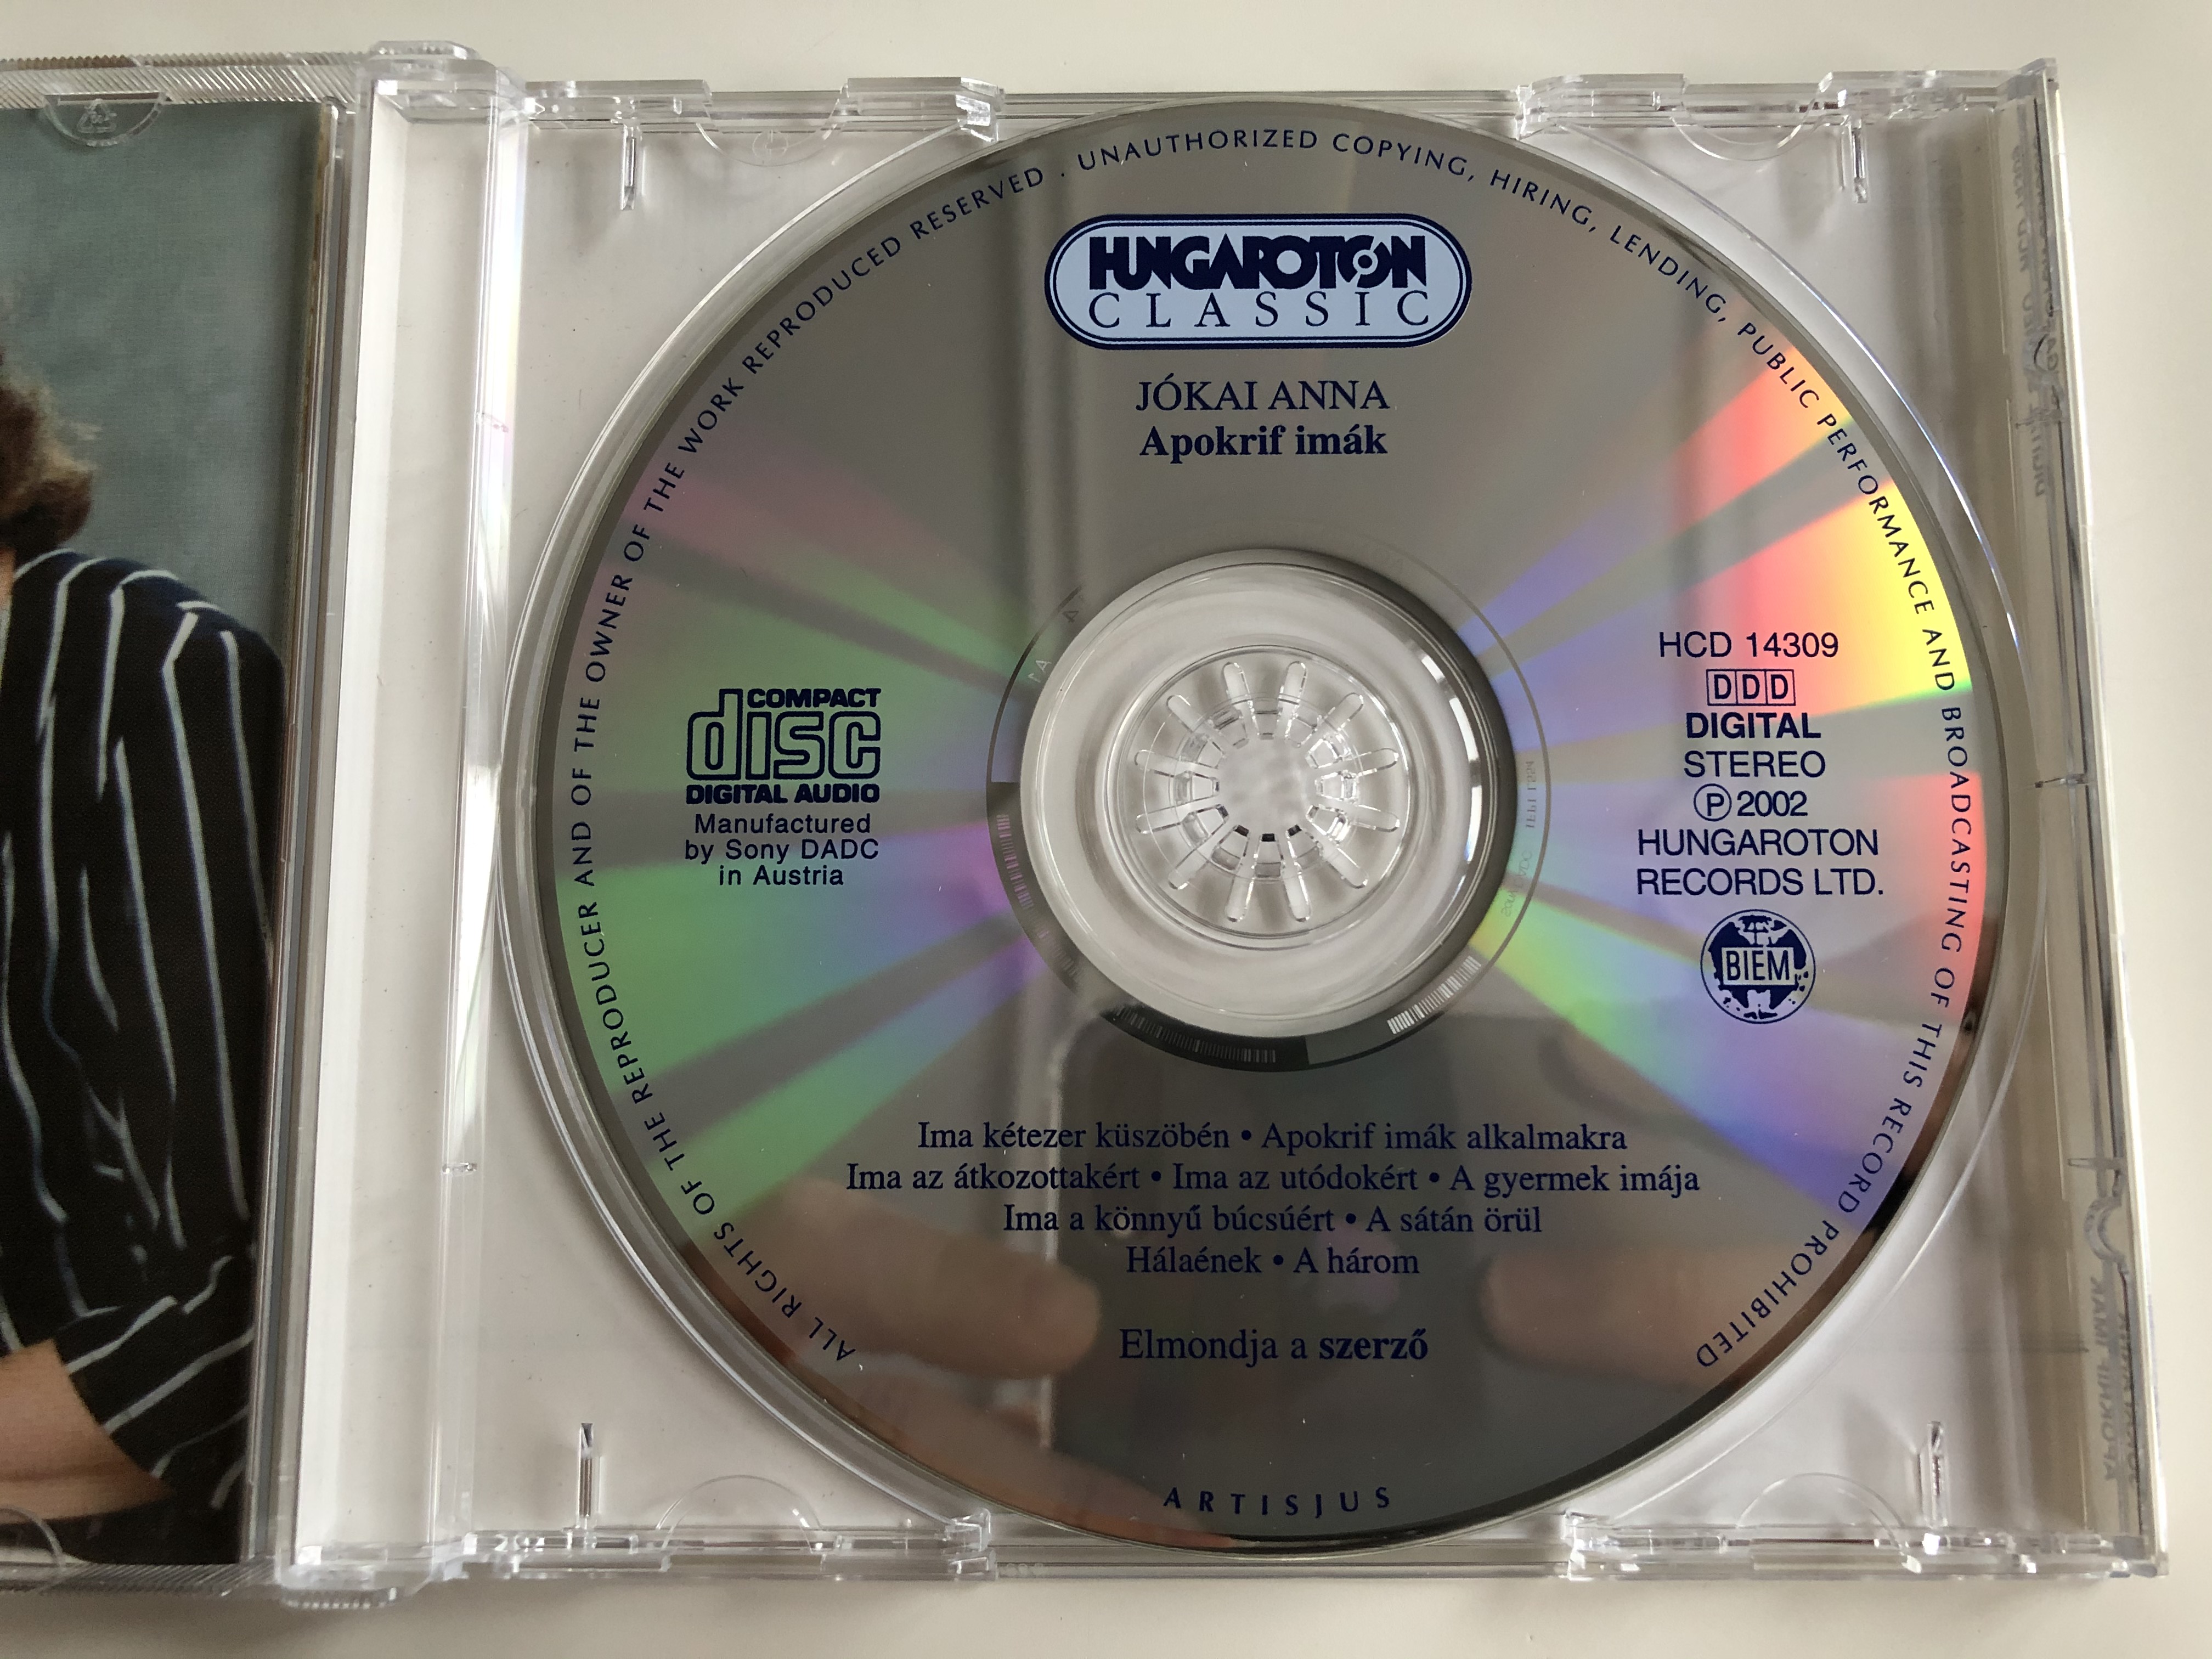 jokai-anna-apokrif-imak-elmondja-a-szerzo-hungaroton-classic-audio-cd-2002-stereo-hcd-14309-5-.jpg